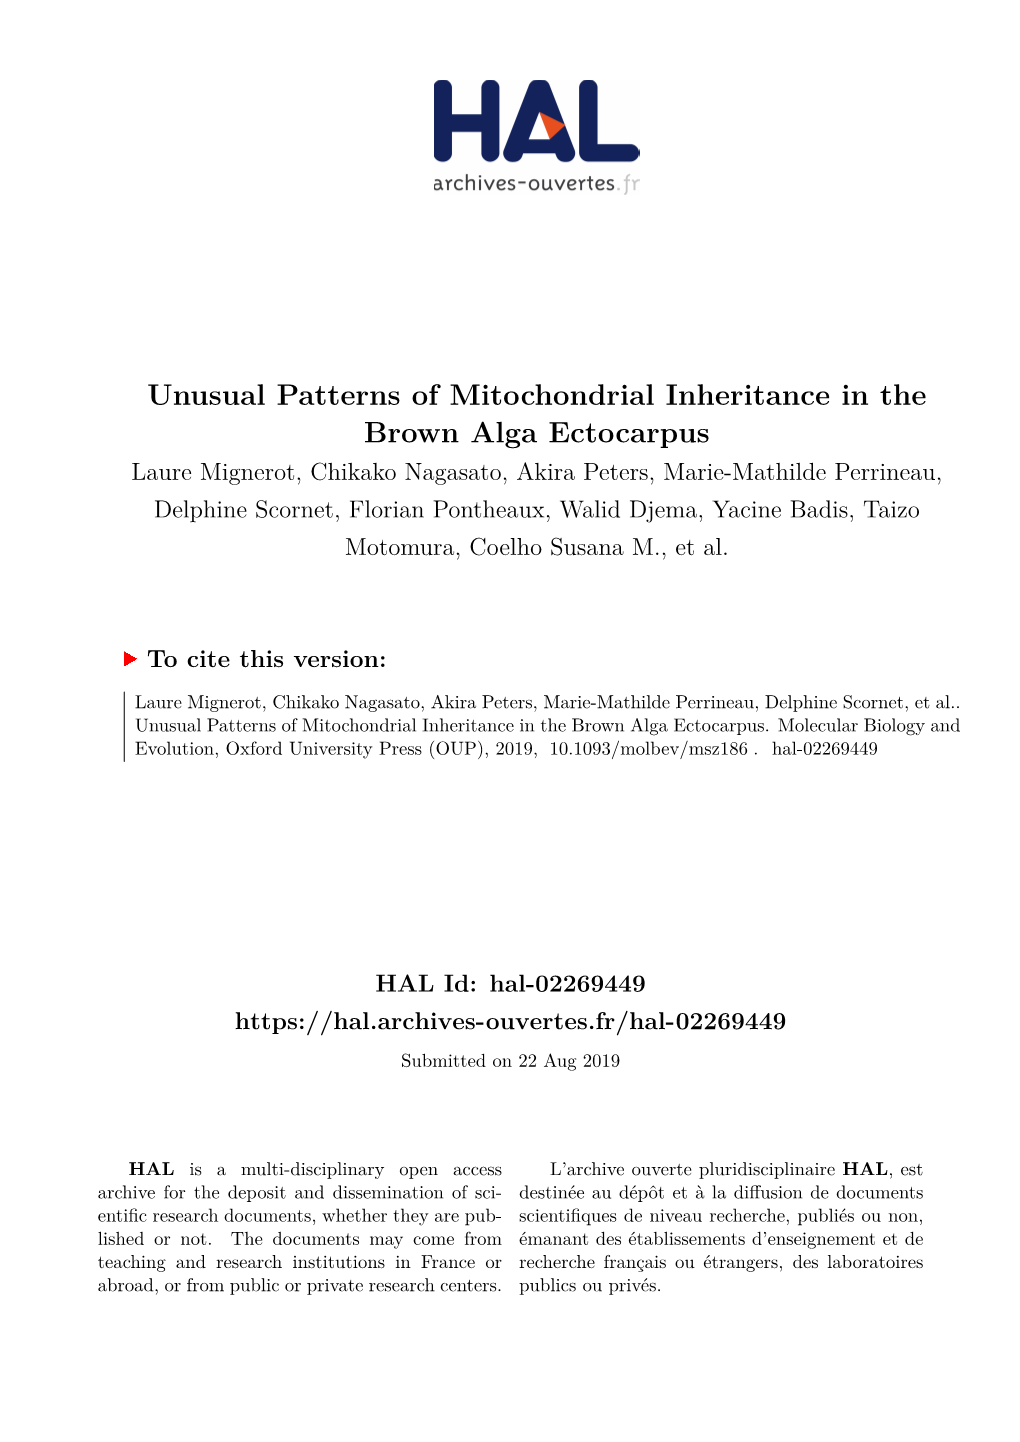 Unusual Patterns of Mitochondrial Inheritance in the Brown Alga Ectocarpus